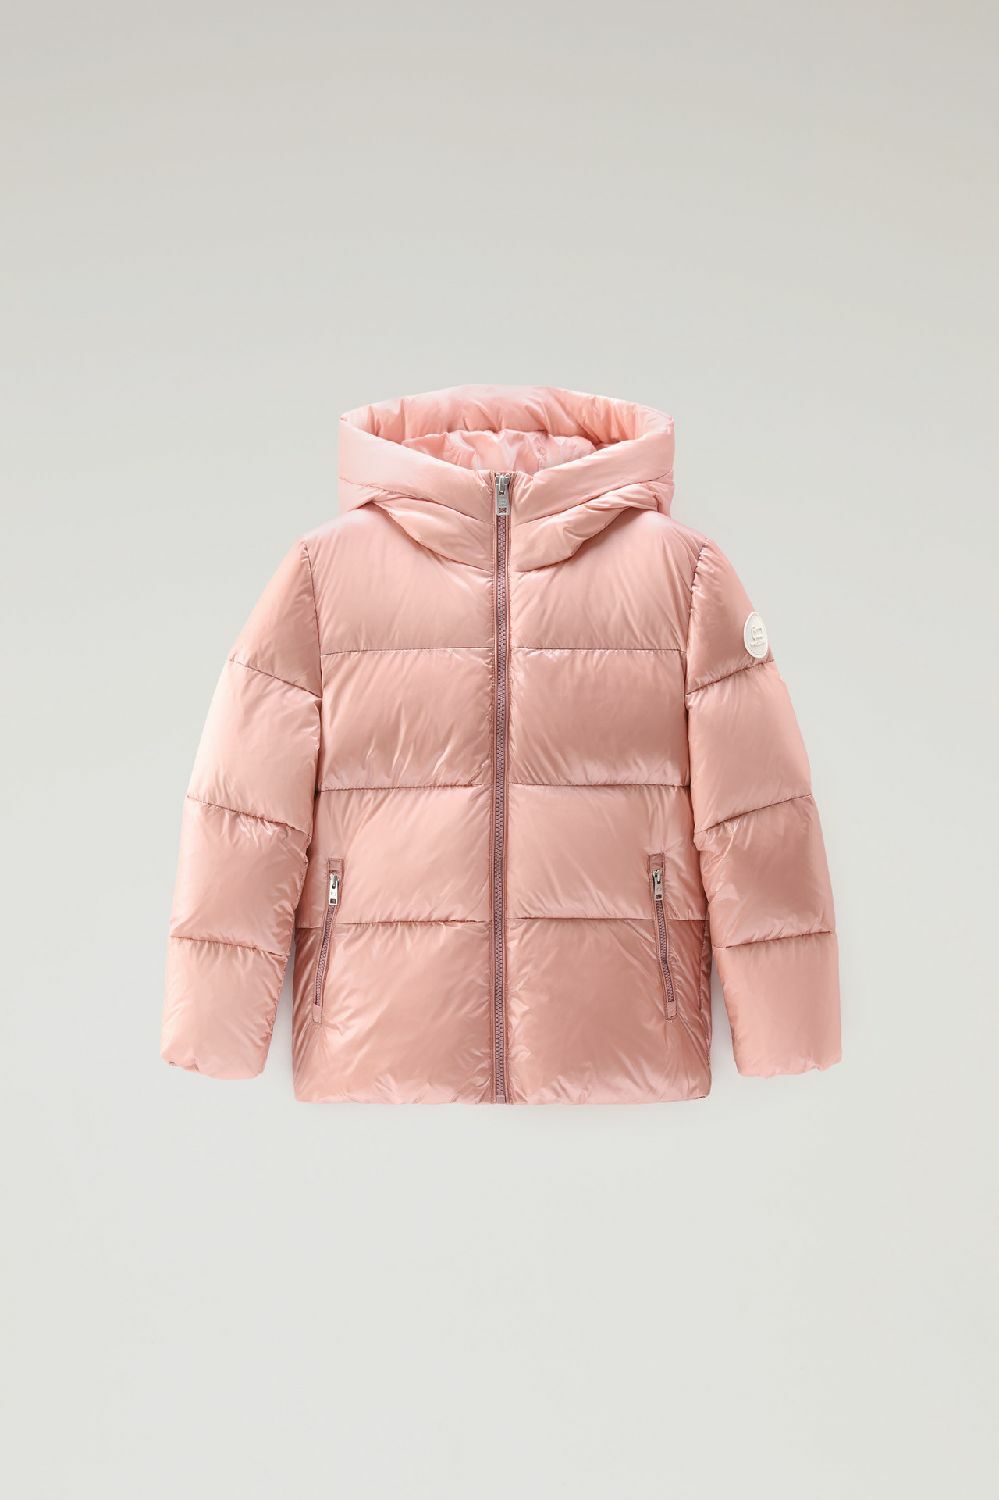 Amerika Rusland tempo Woolrich - Quilted Glossy jacket - pink online kopen bij Prisca Kindermode  en Tienermode. CFWKOU0329FRUT-4018 Prisca junior